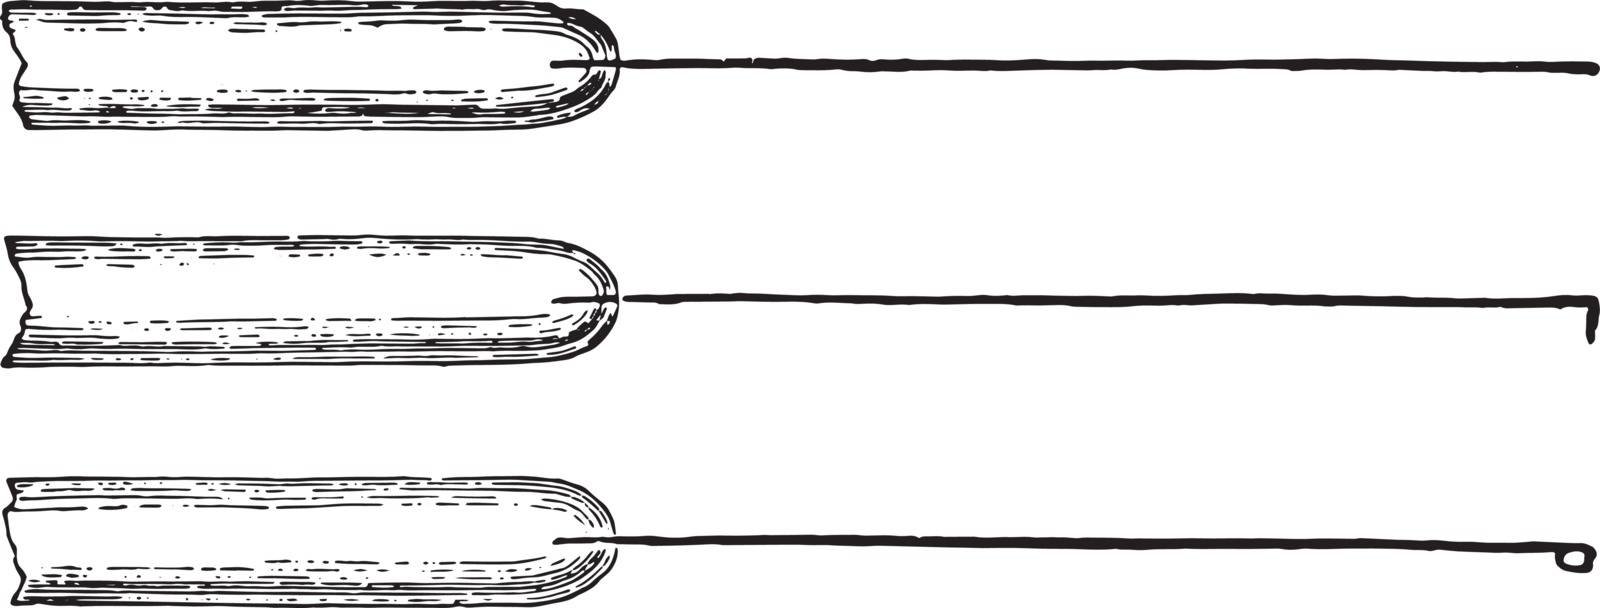 Platinum inoculating needles mounted in glass rods, vintage engraved illustration.
